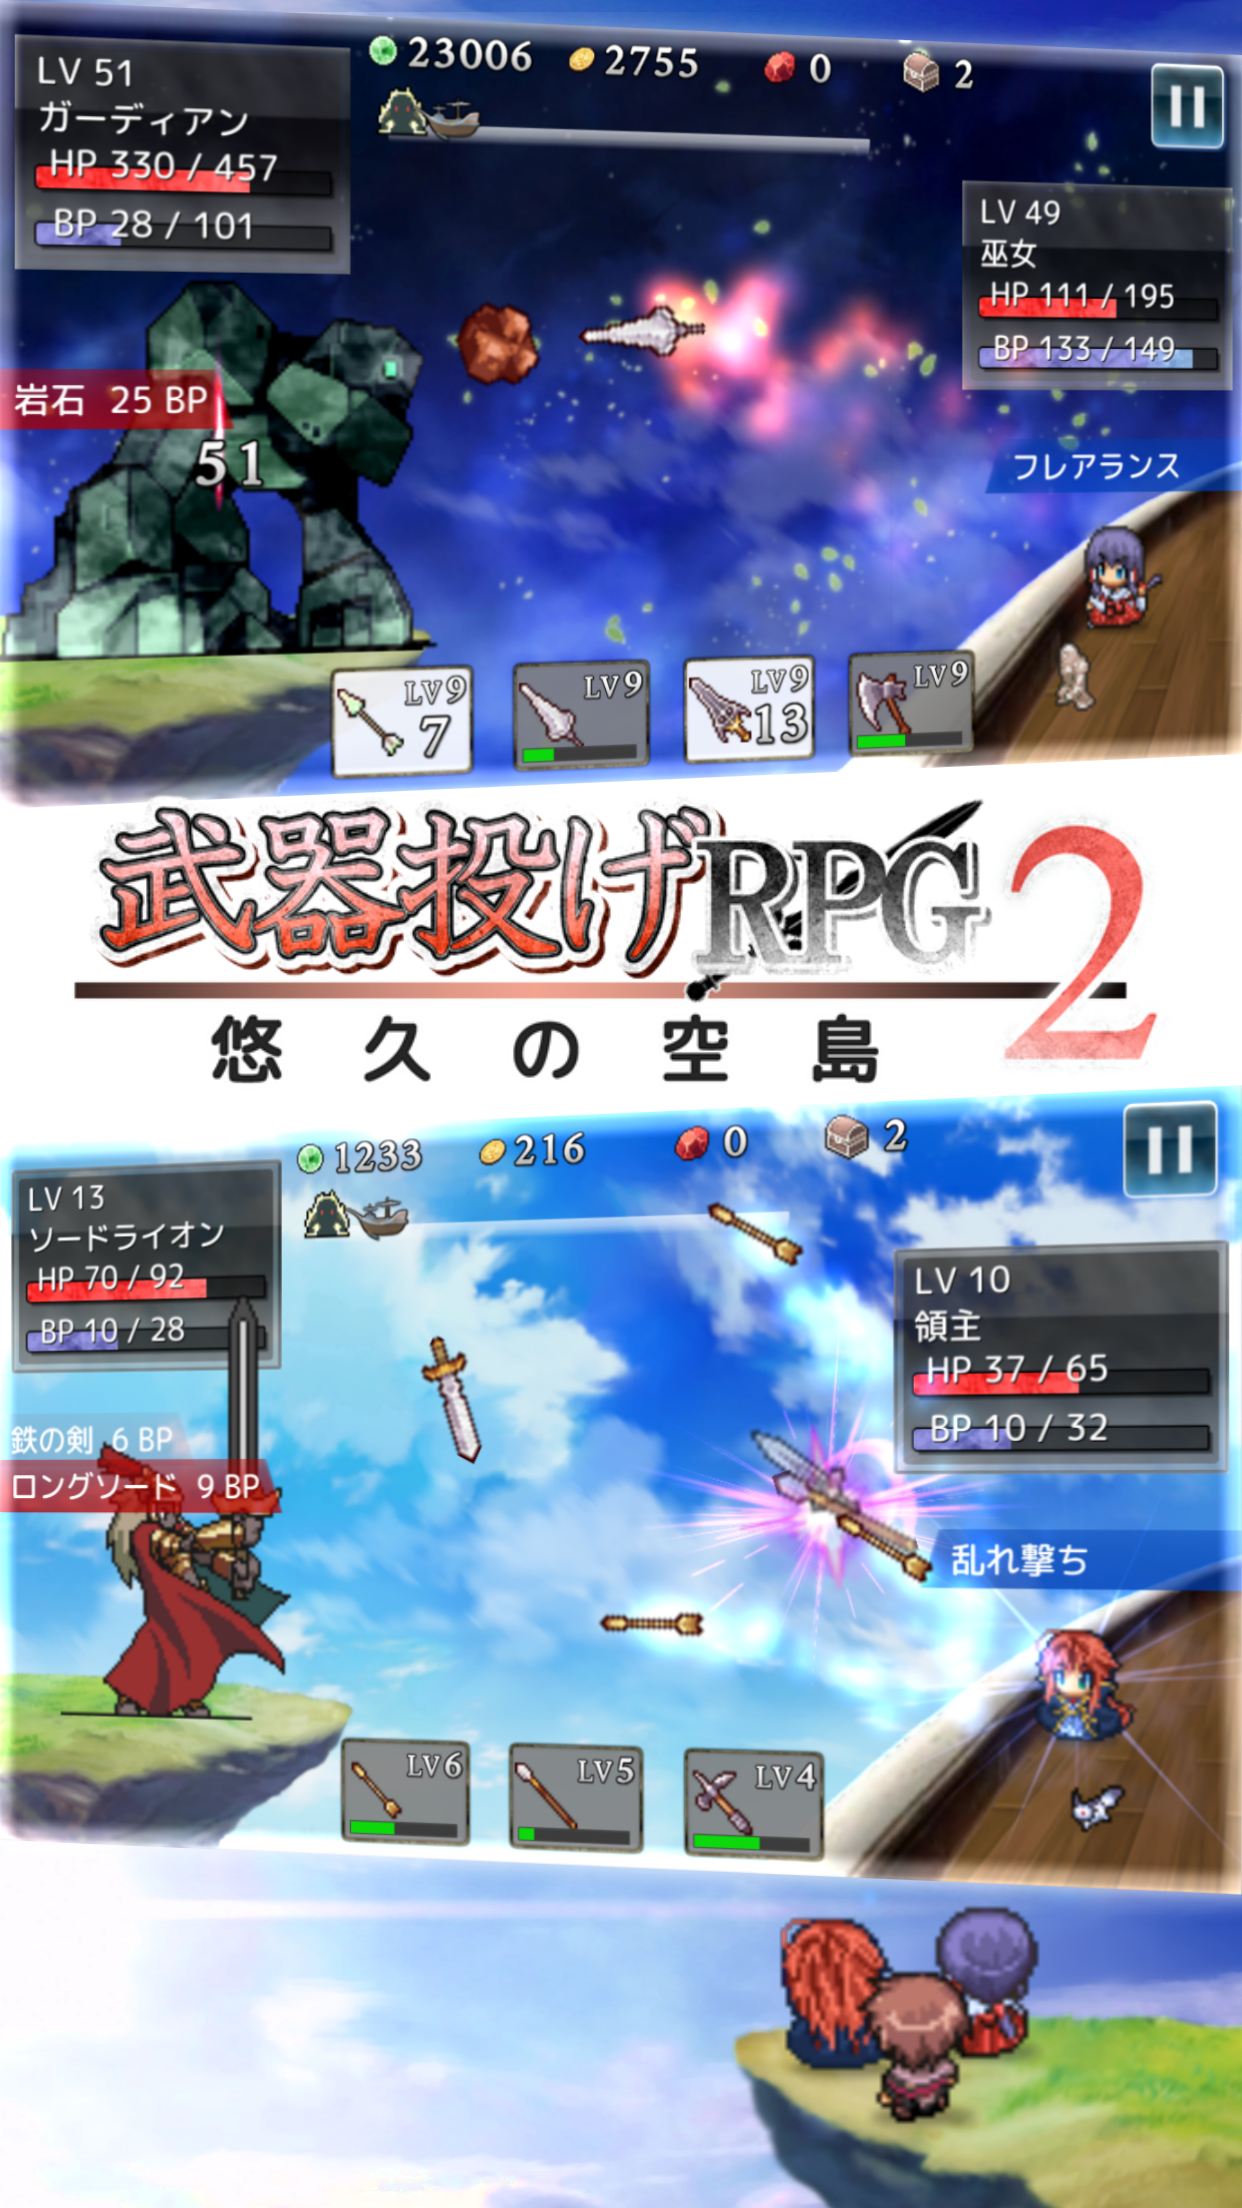 Screenshot 1 of Melempar Senjata RPG2 Eternal Sky Island 1.1.4